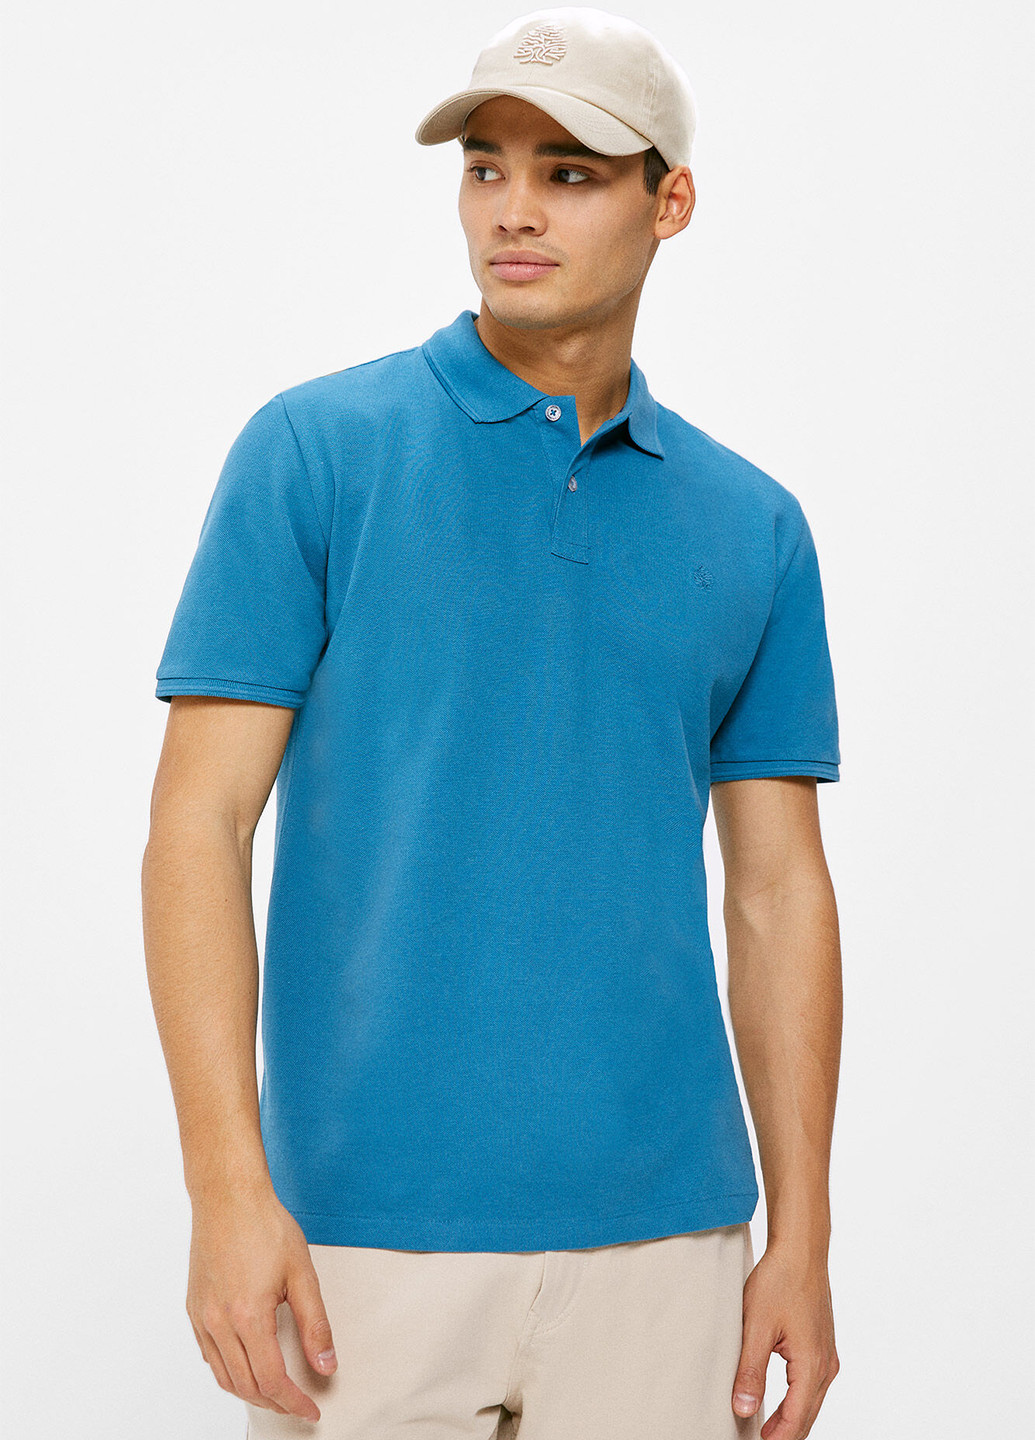 Голубой футболка-поло для мужчин Springfield однотонная